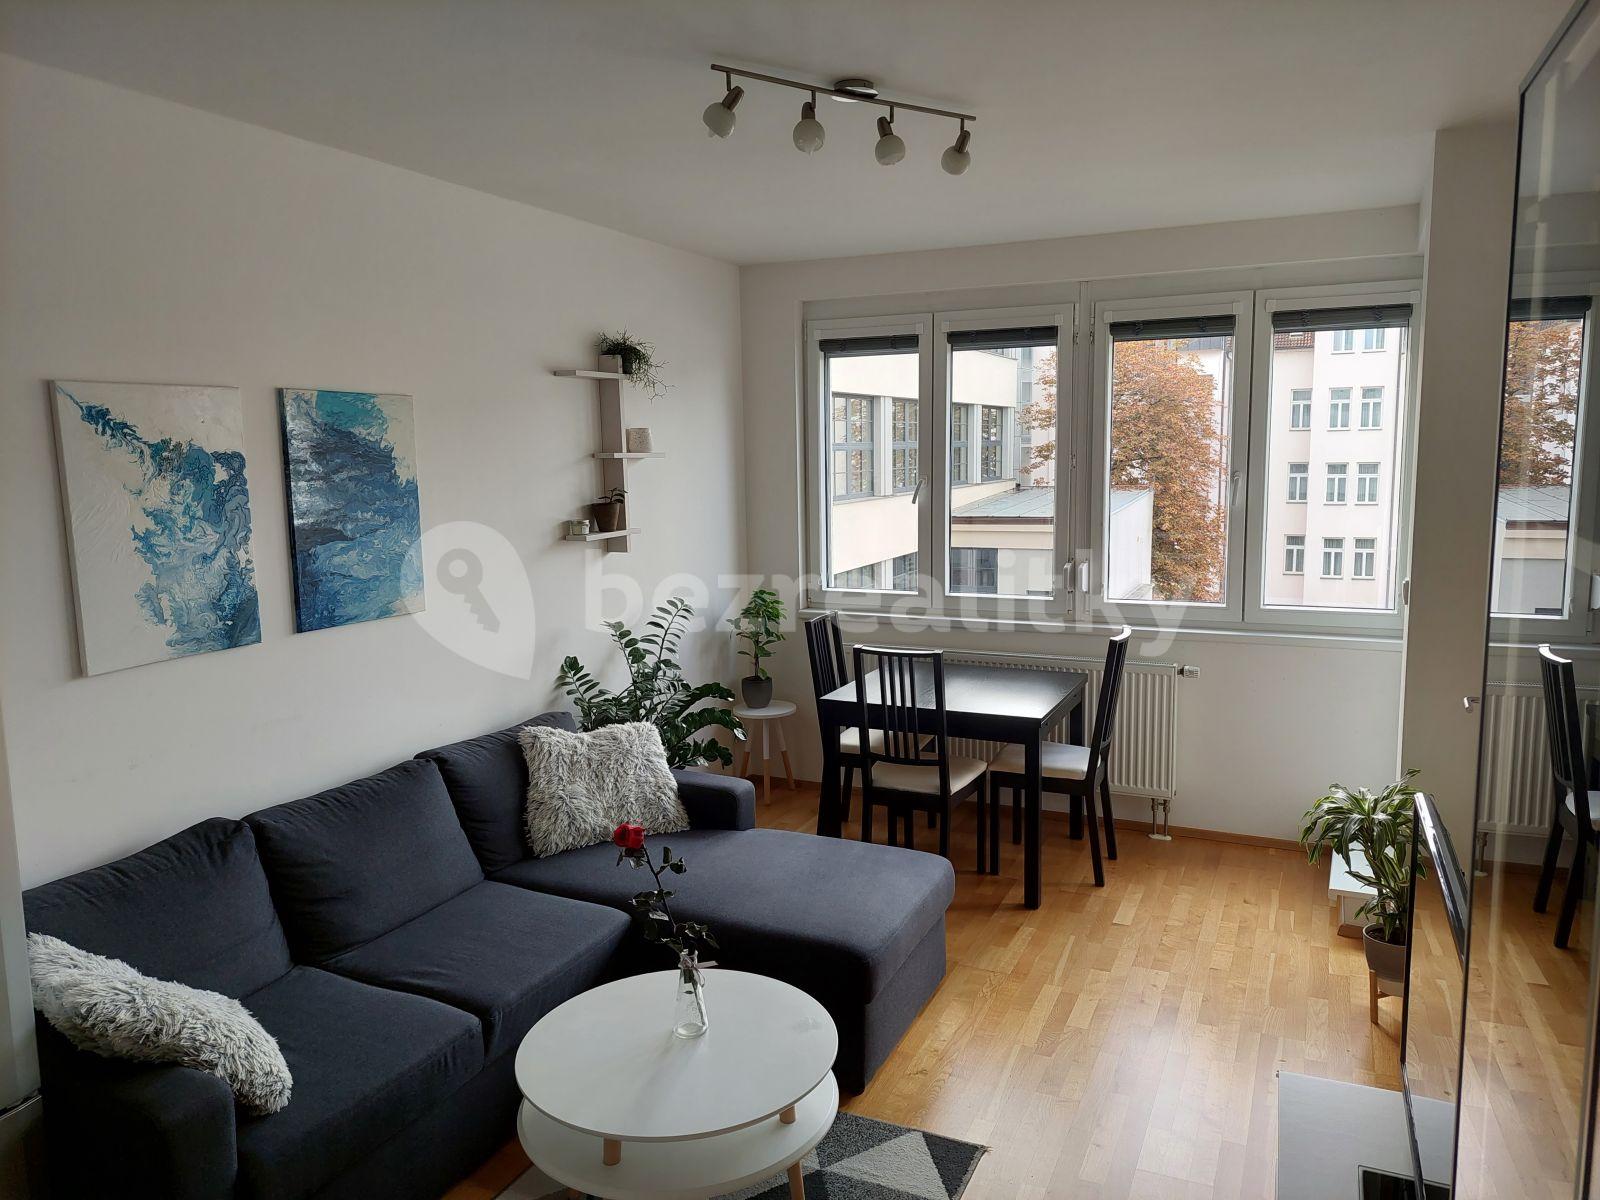 1 bedroom with open-plan kitchen flat to rent, 50 m², U Svobodárny, Prague, Prague